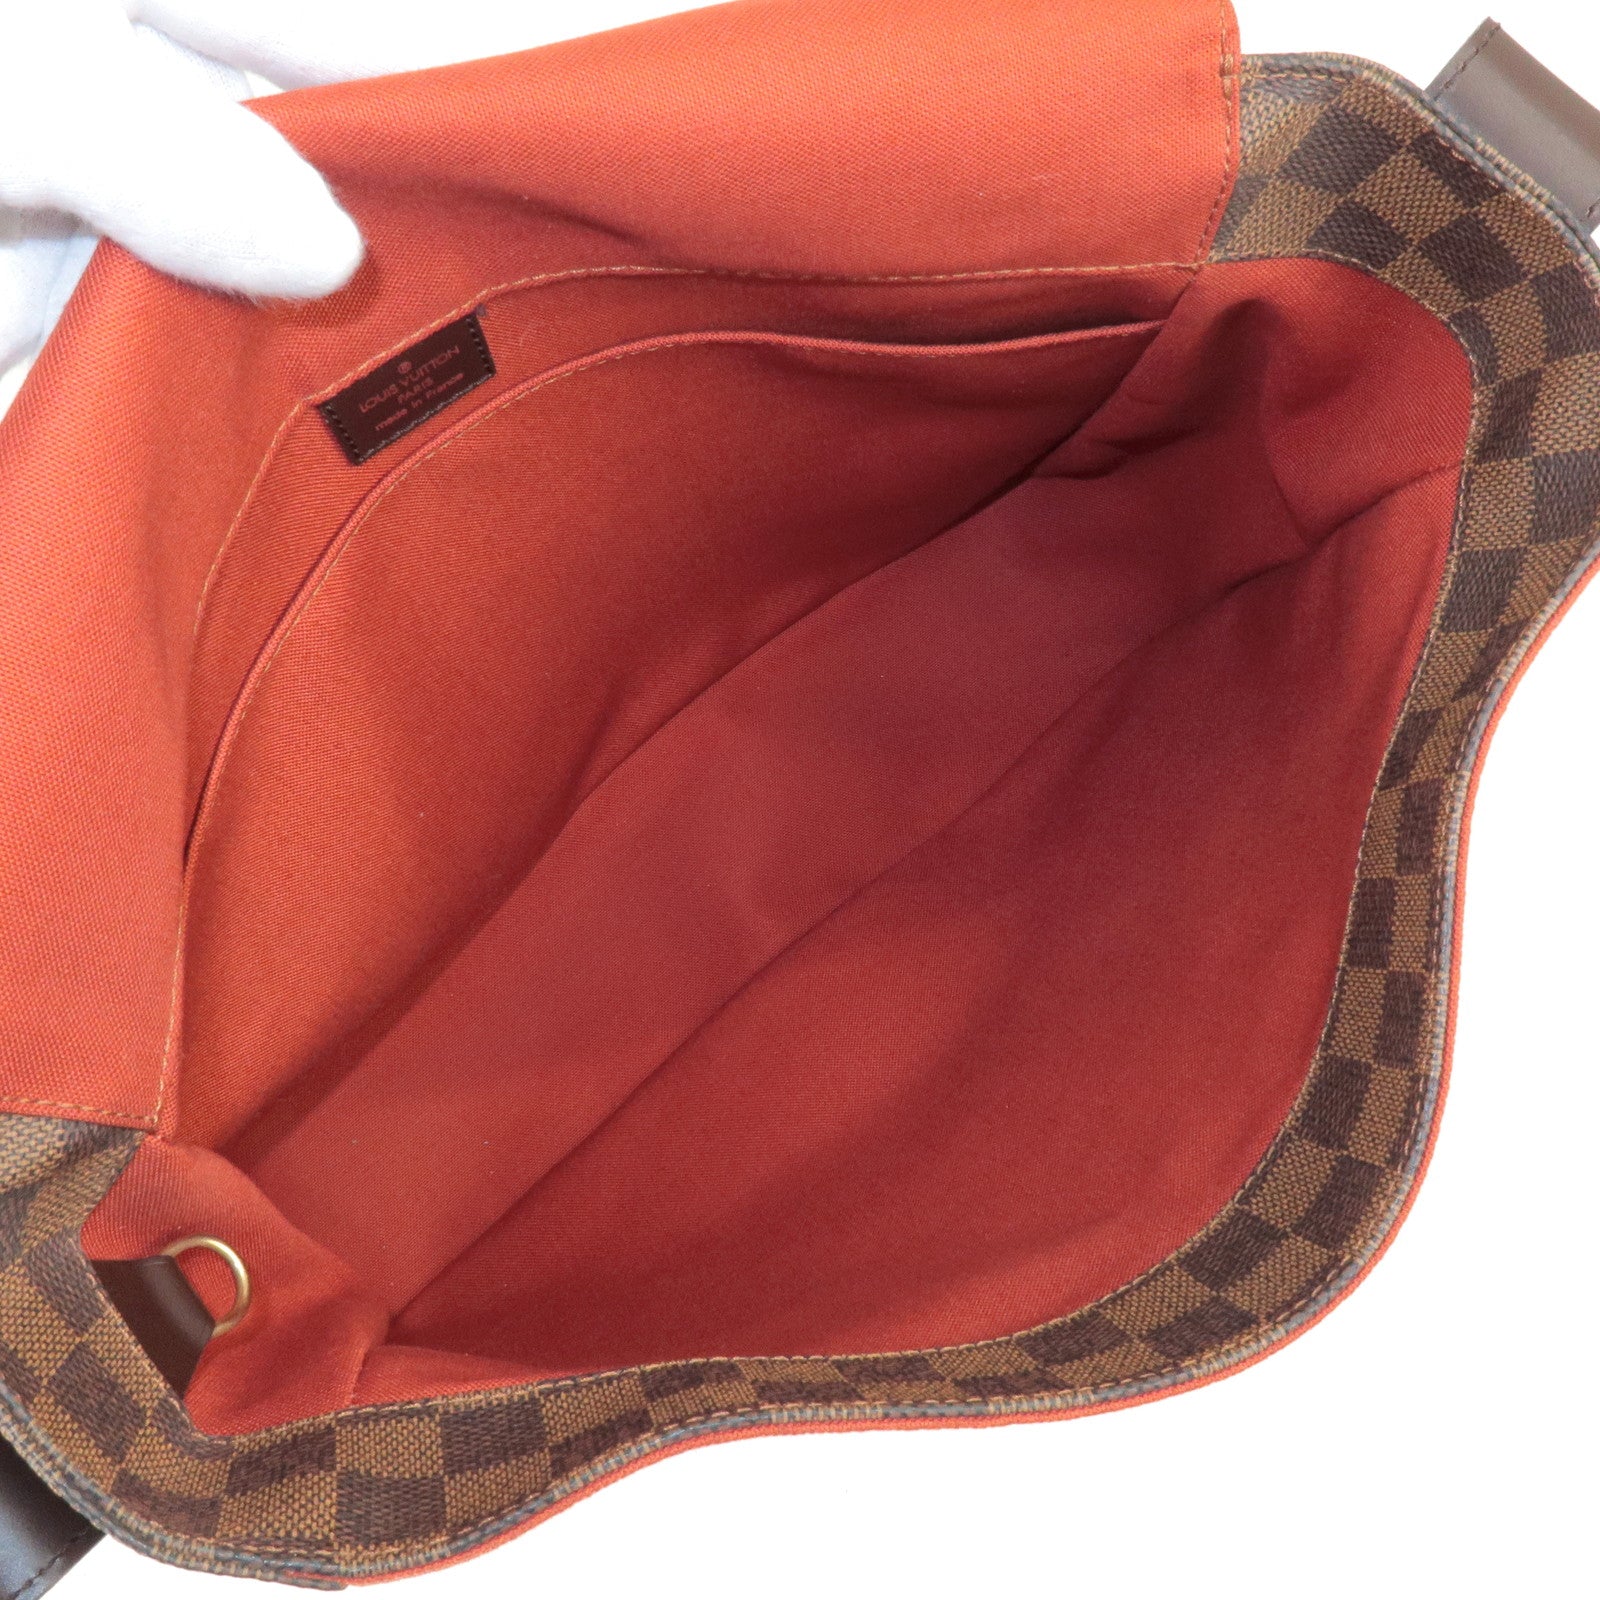 Louis Vuitton Damier Ebene Bastille Messenger Bag. Made in France